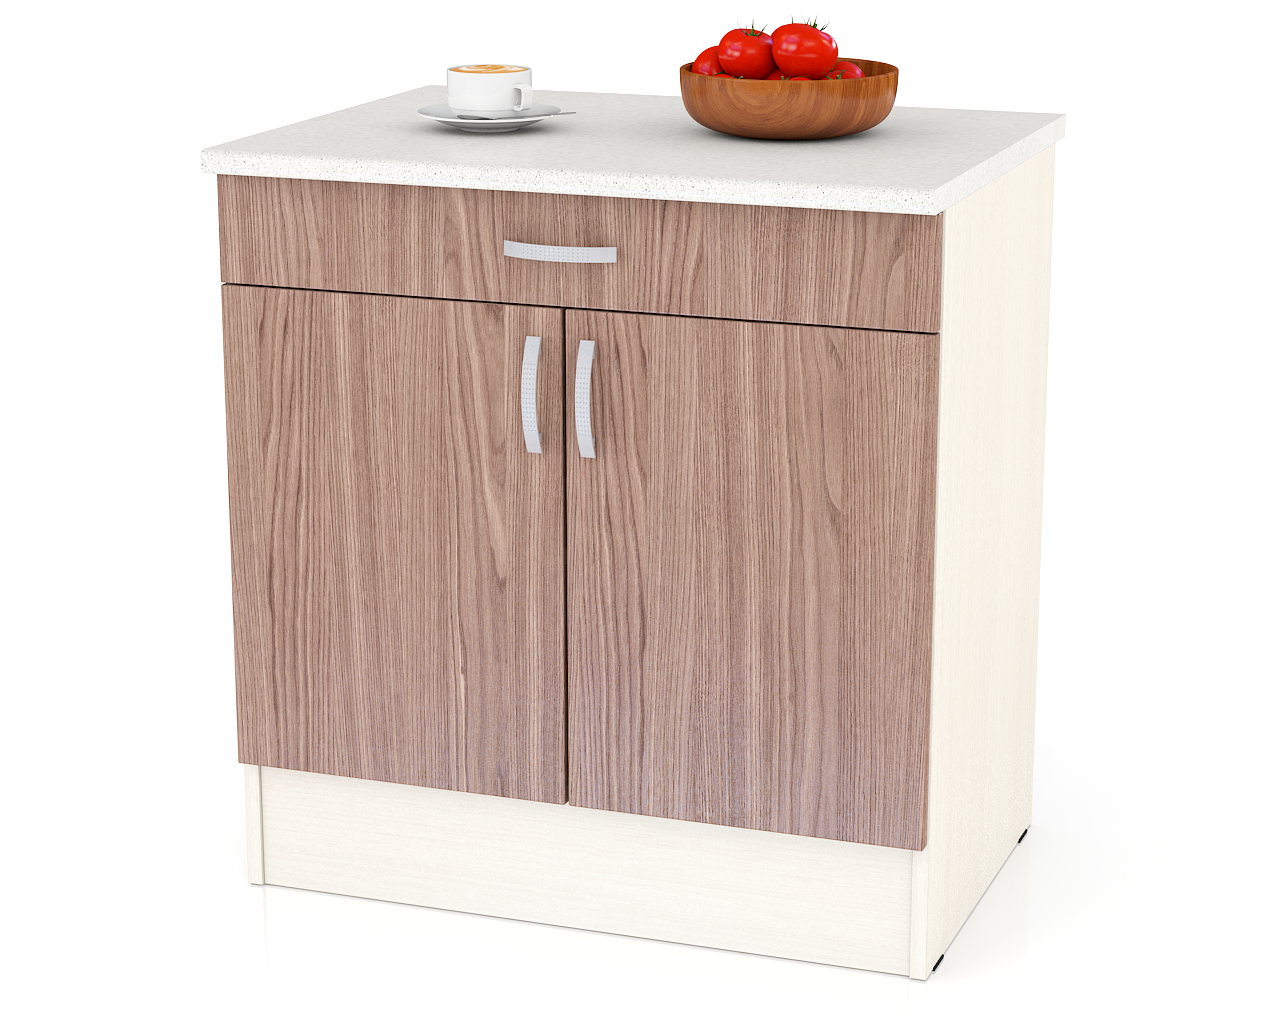 Кухонный стол МД-ШН1Я800 Стол с 1 ящиком 80 см., цвет дуб/ясень шимо тёмный, ШхГхВ 80х60х85 см.